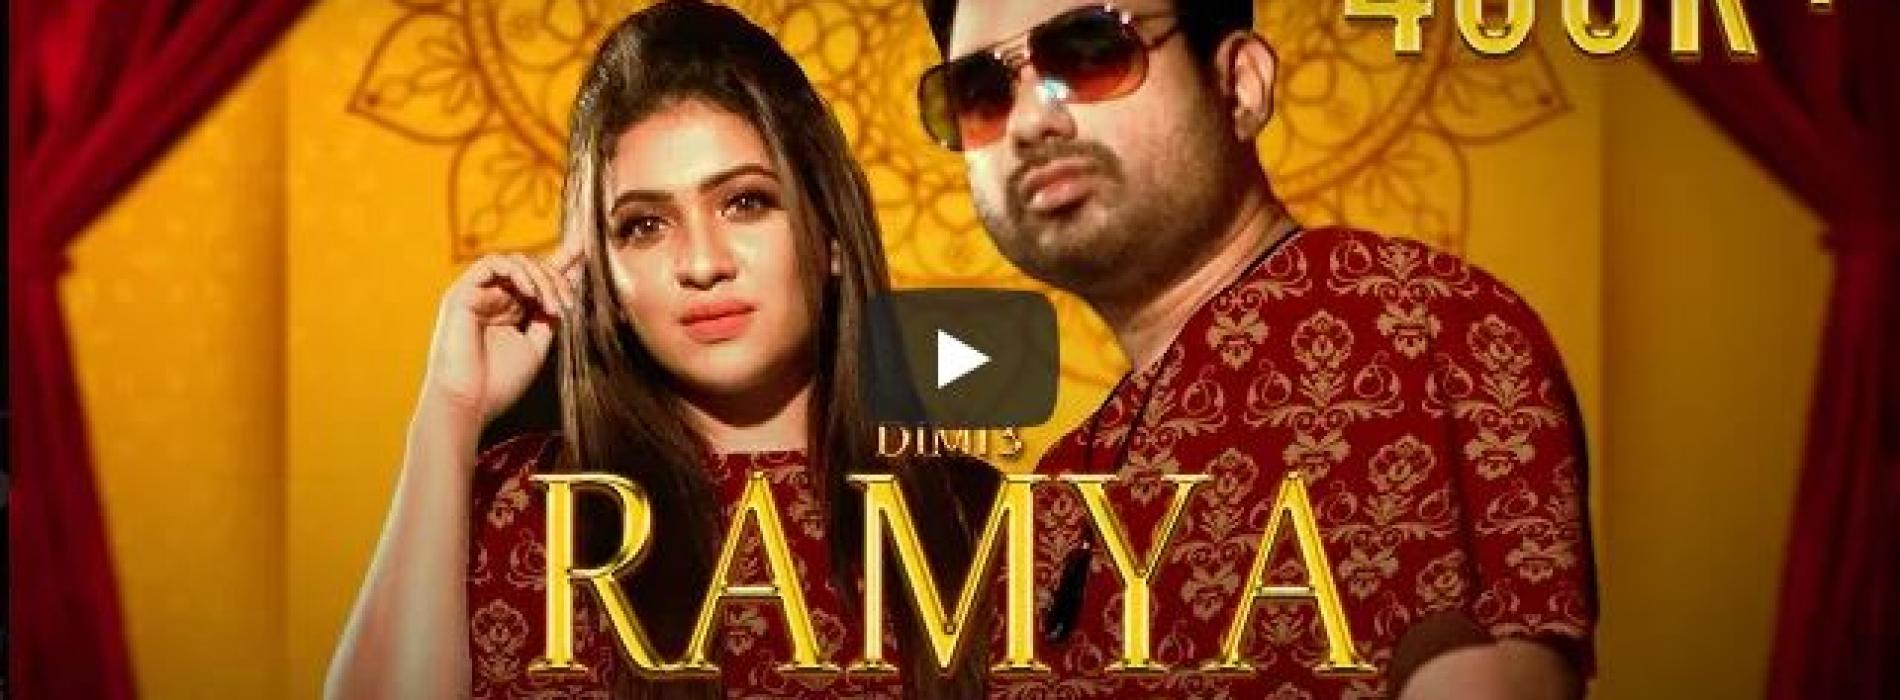 New Music : Dimi3 – Ramya No 1 (රම්‍ය නො 1) Official Music Video